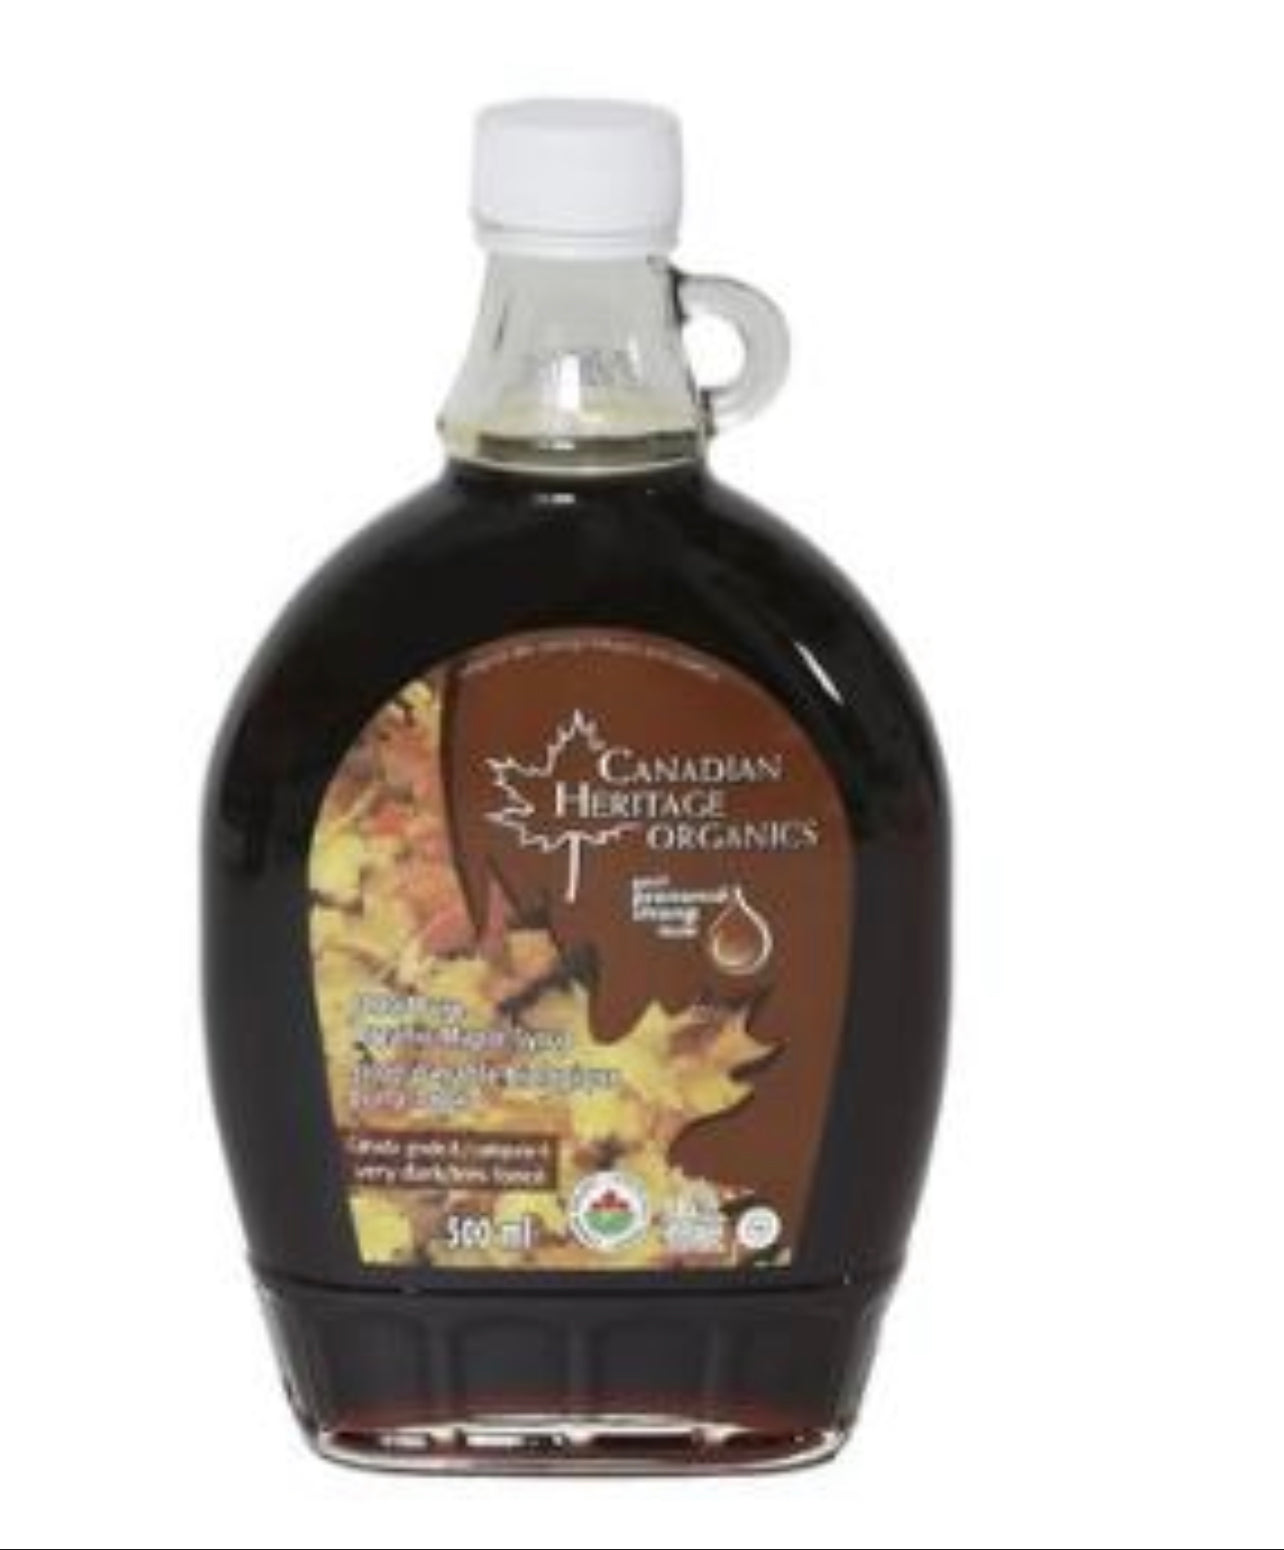 ✅ Canadian Heritage Organics Very Dark Maple Syrup 500ml